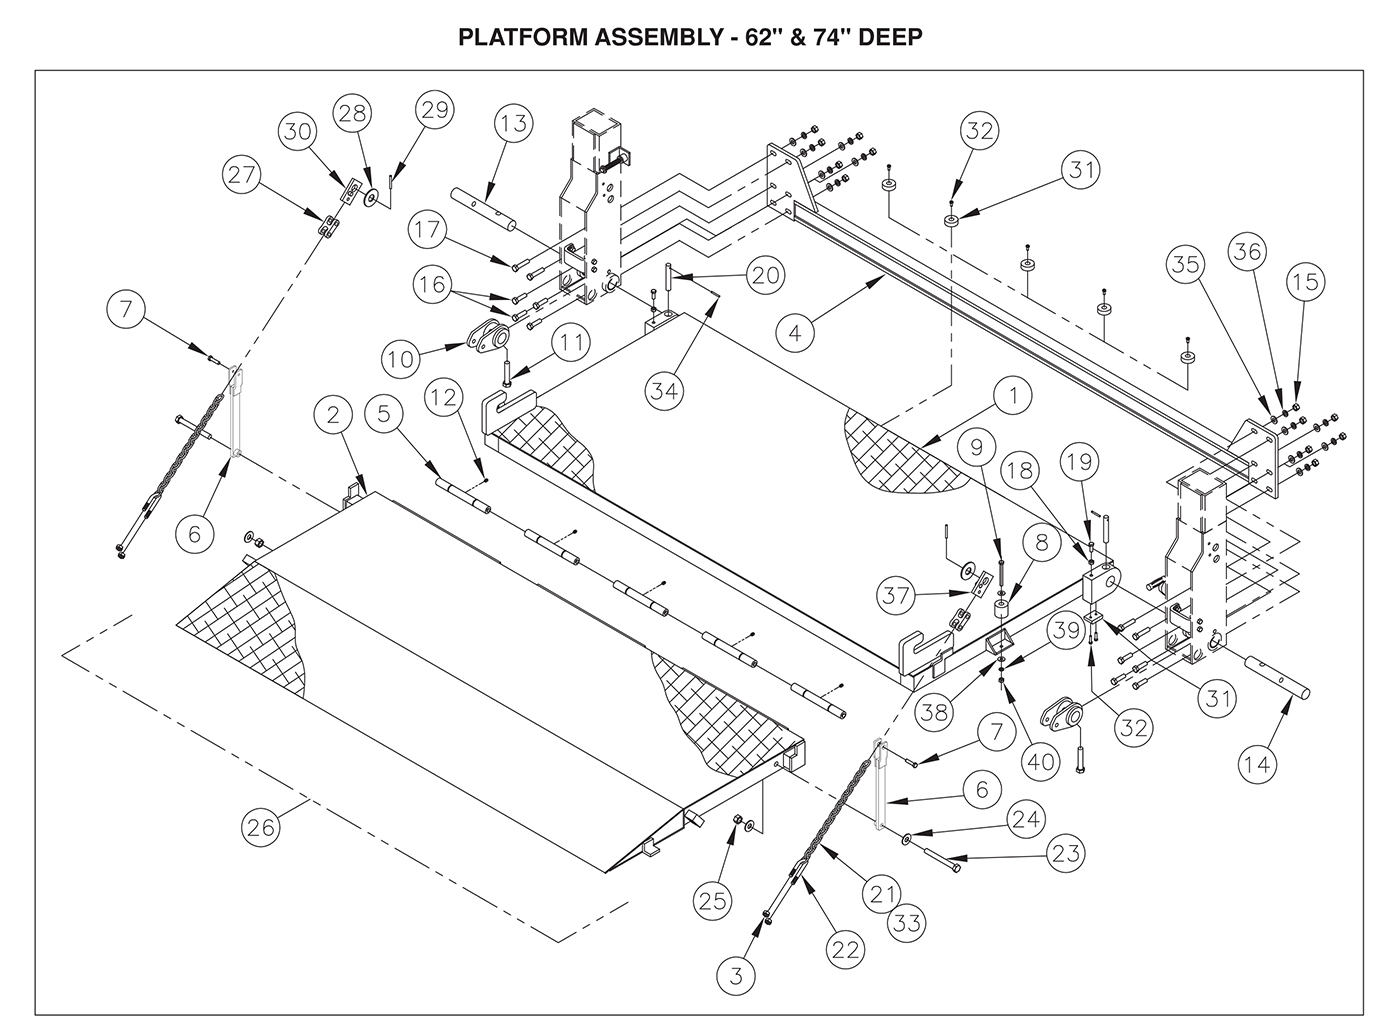 TDR 44/55/66 Deep Platform Assembly (62-74 Inches) Diagram